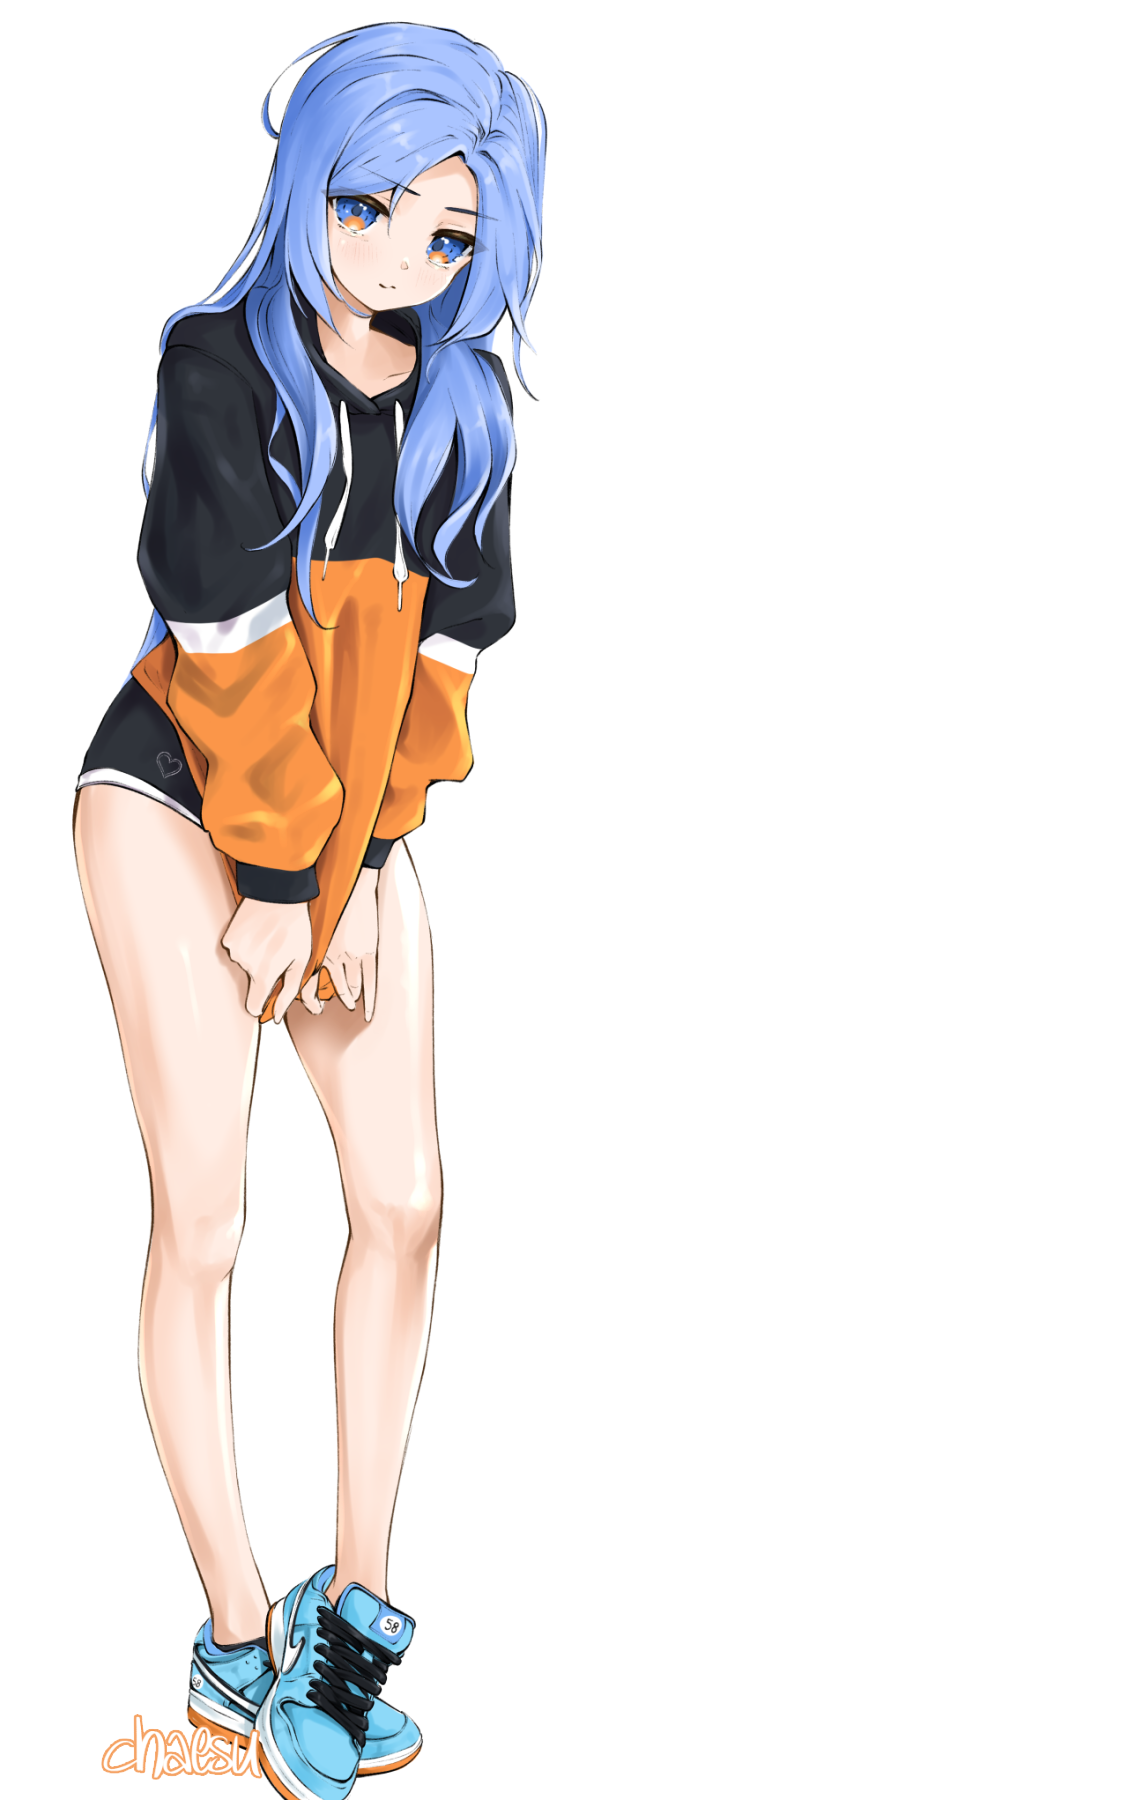 Chaesu Blue Hair Blue Eyes Anime Anime Girls Digital Art Artwork 2d Portrait Display 5239